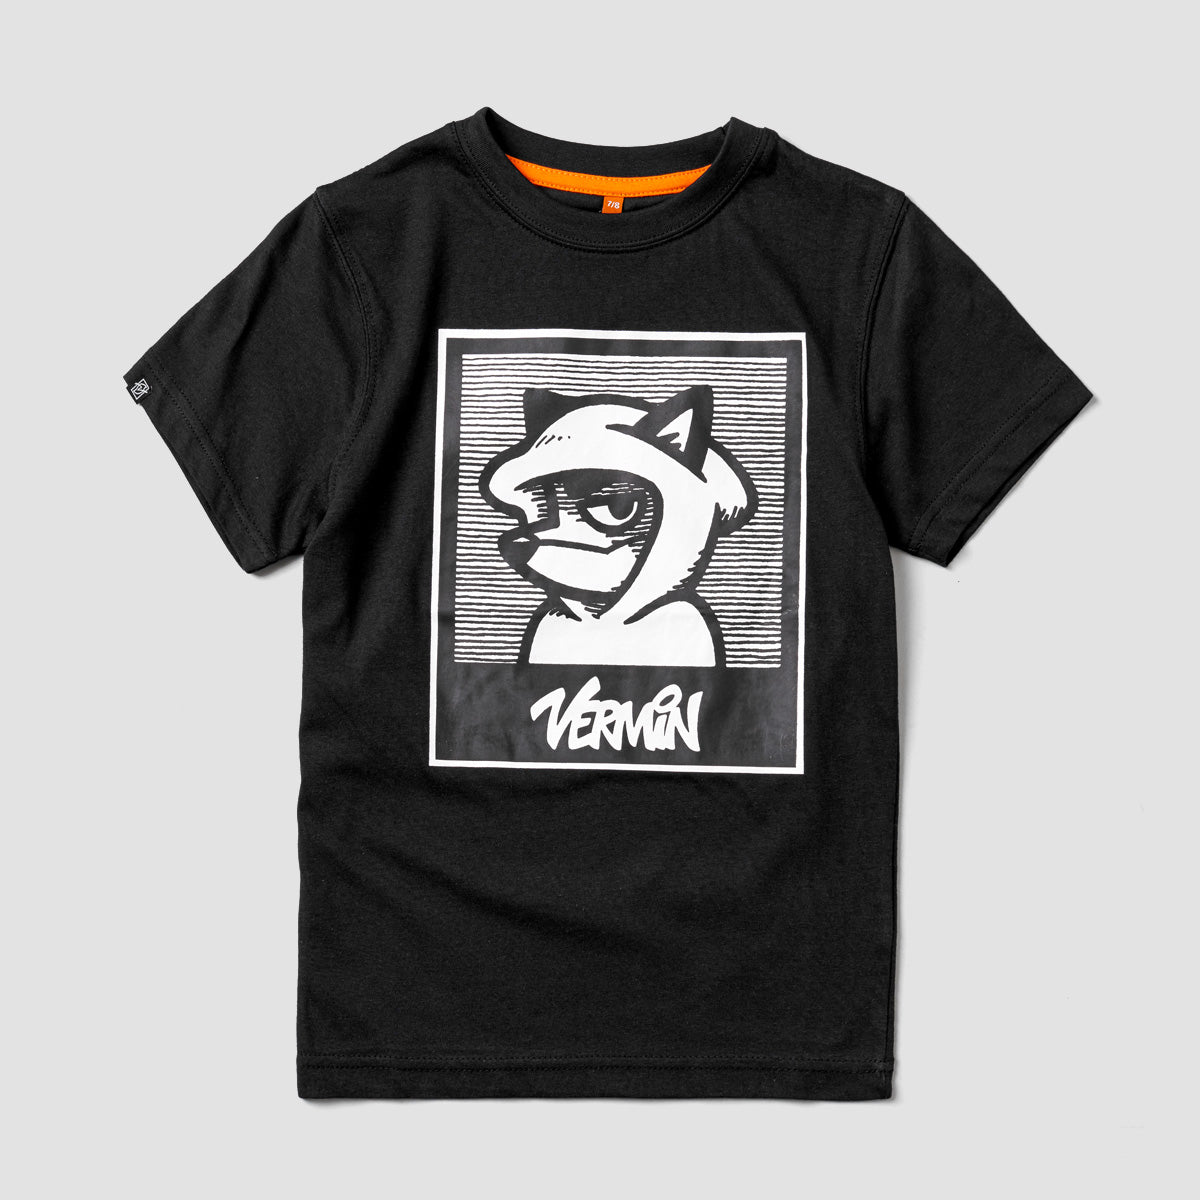 Vermin Fox Box Organic T-Shirt Black - Kids Unisex